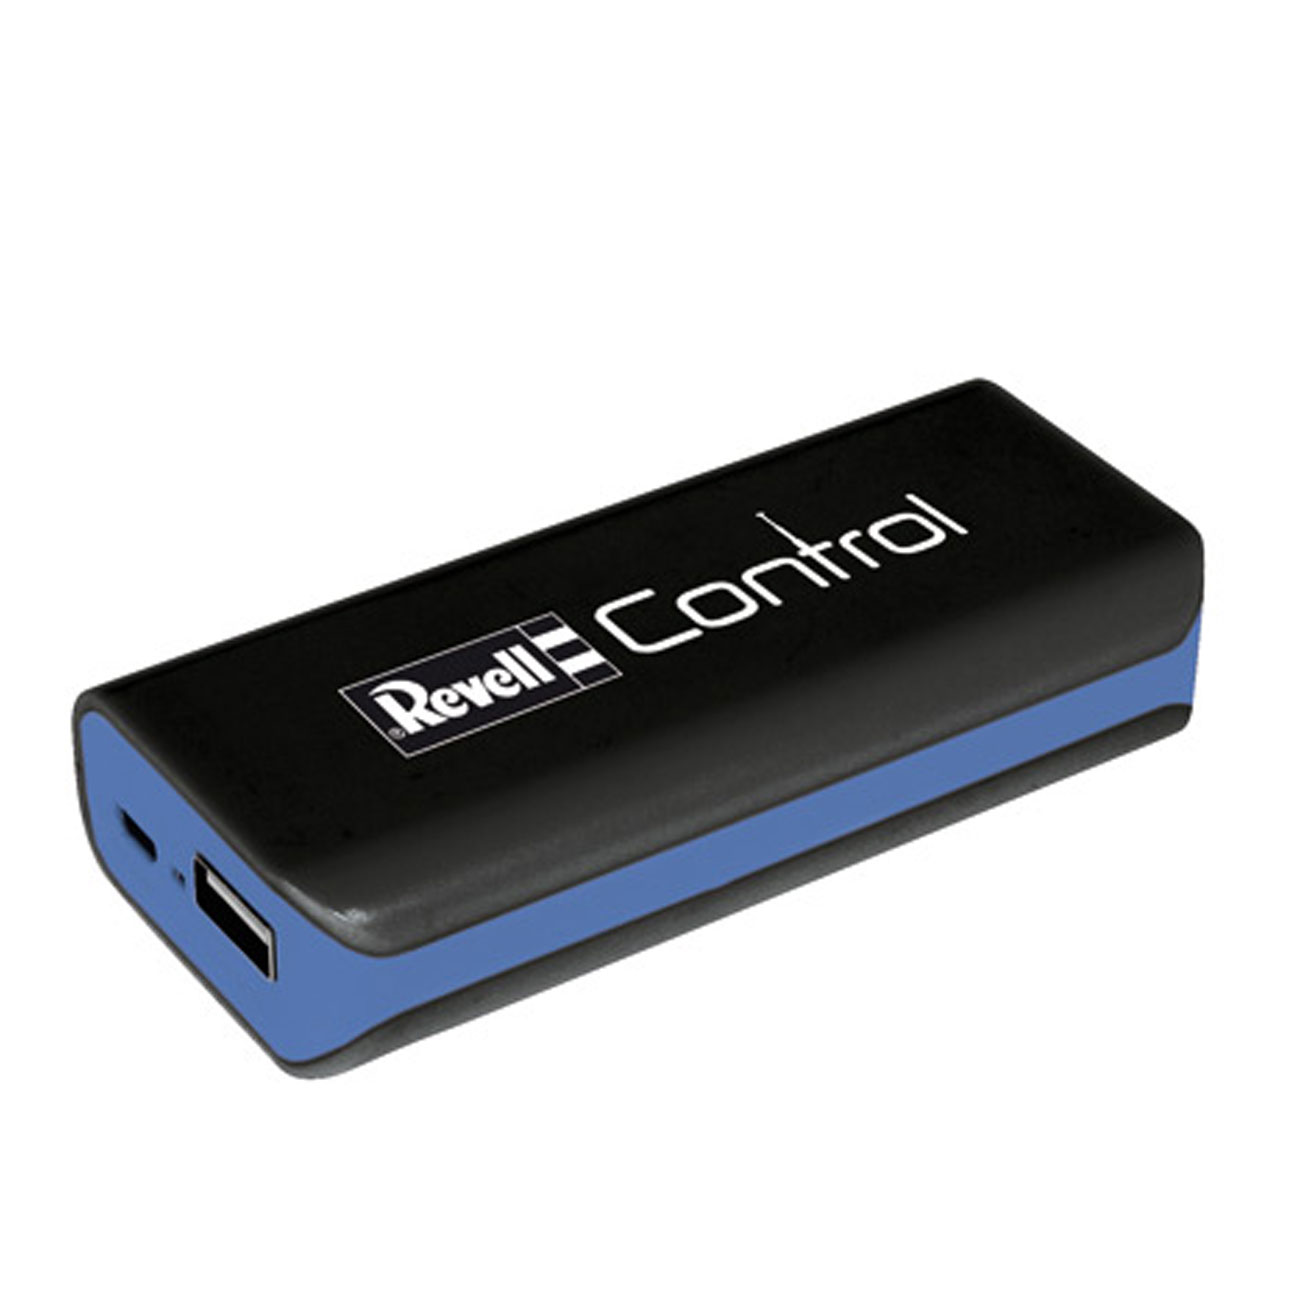 Revell Control Power Bar 4000mAh mit USB Kabel 40300